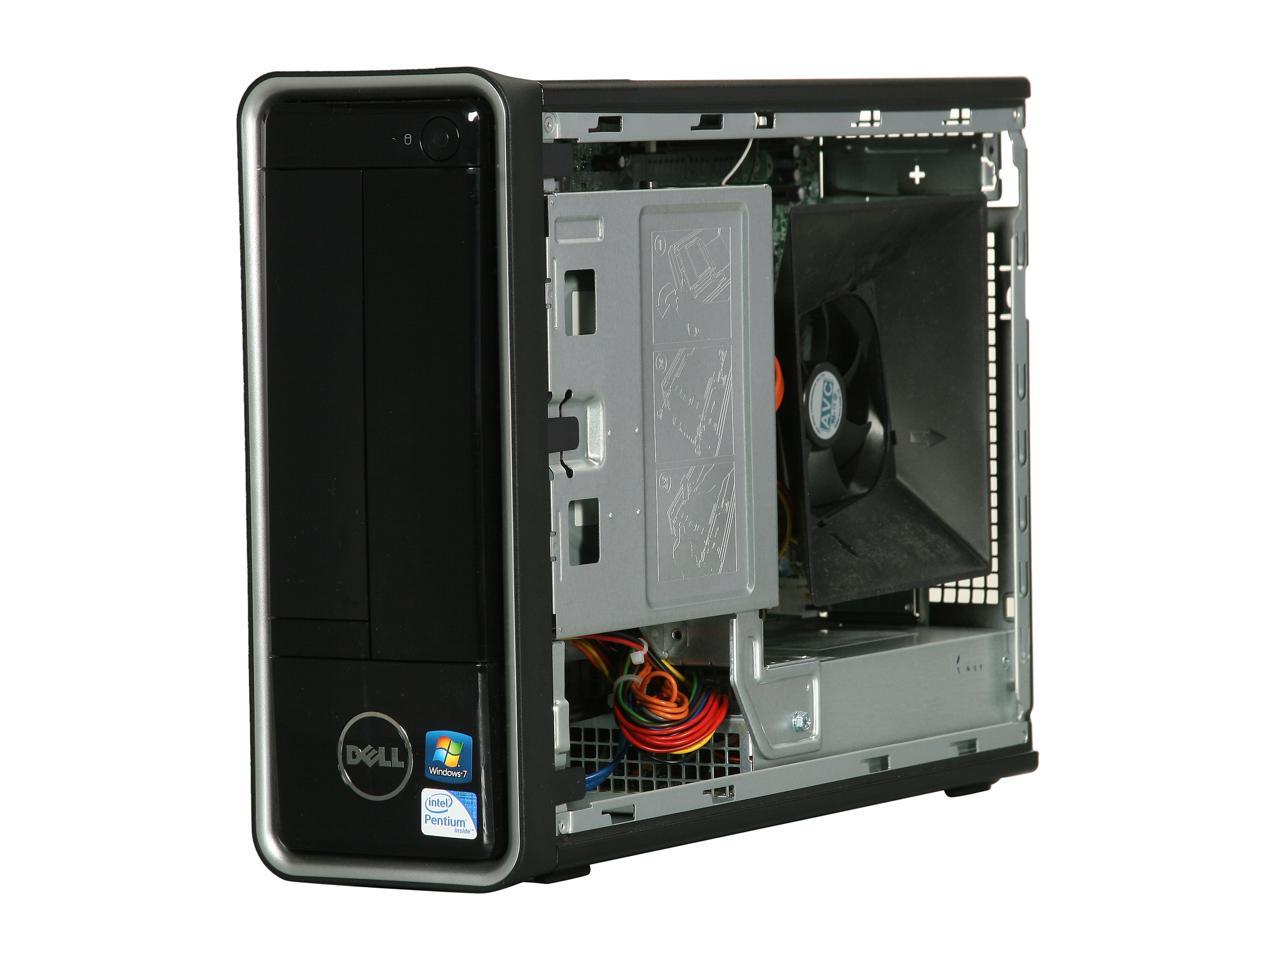 DELL Desktop PC Inspiron 660s (i660s-2308BK) Pentium G630 (2.70 GHz) 4